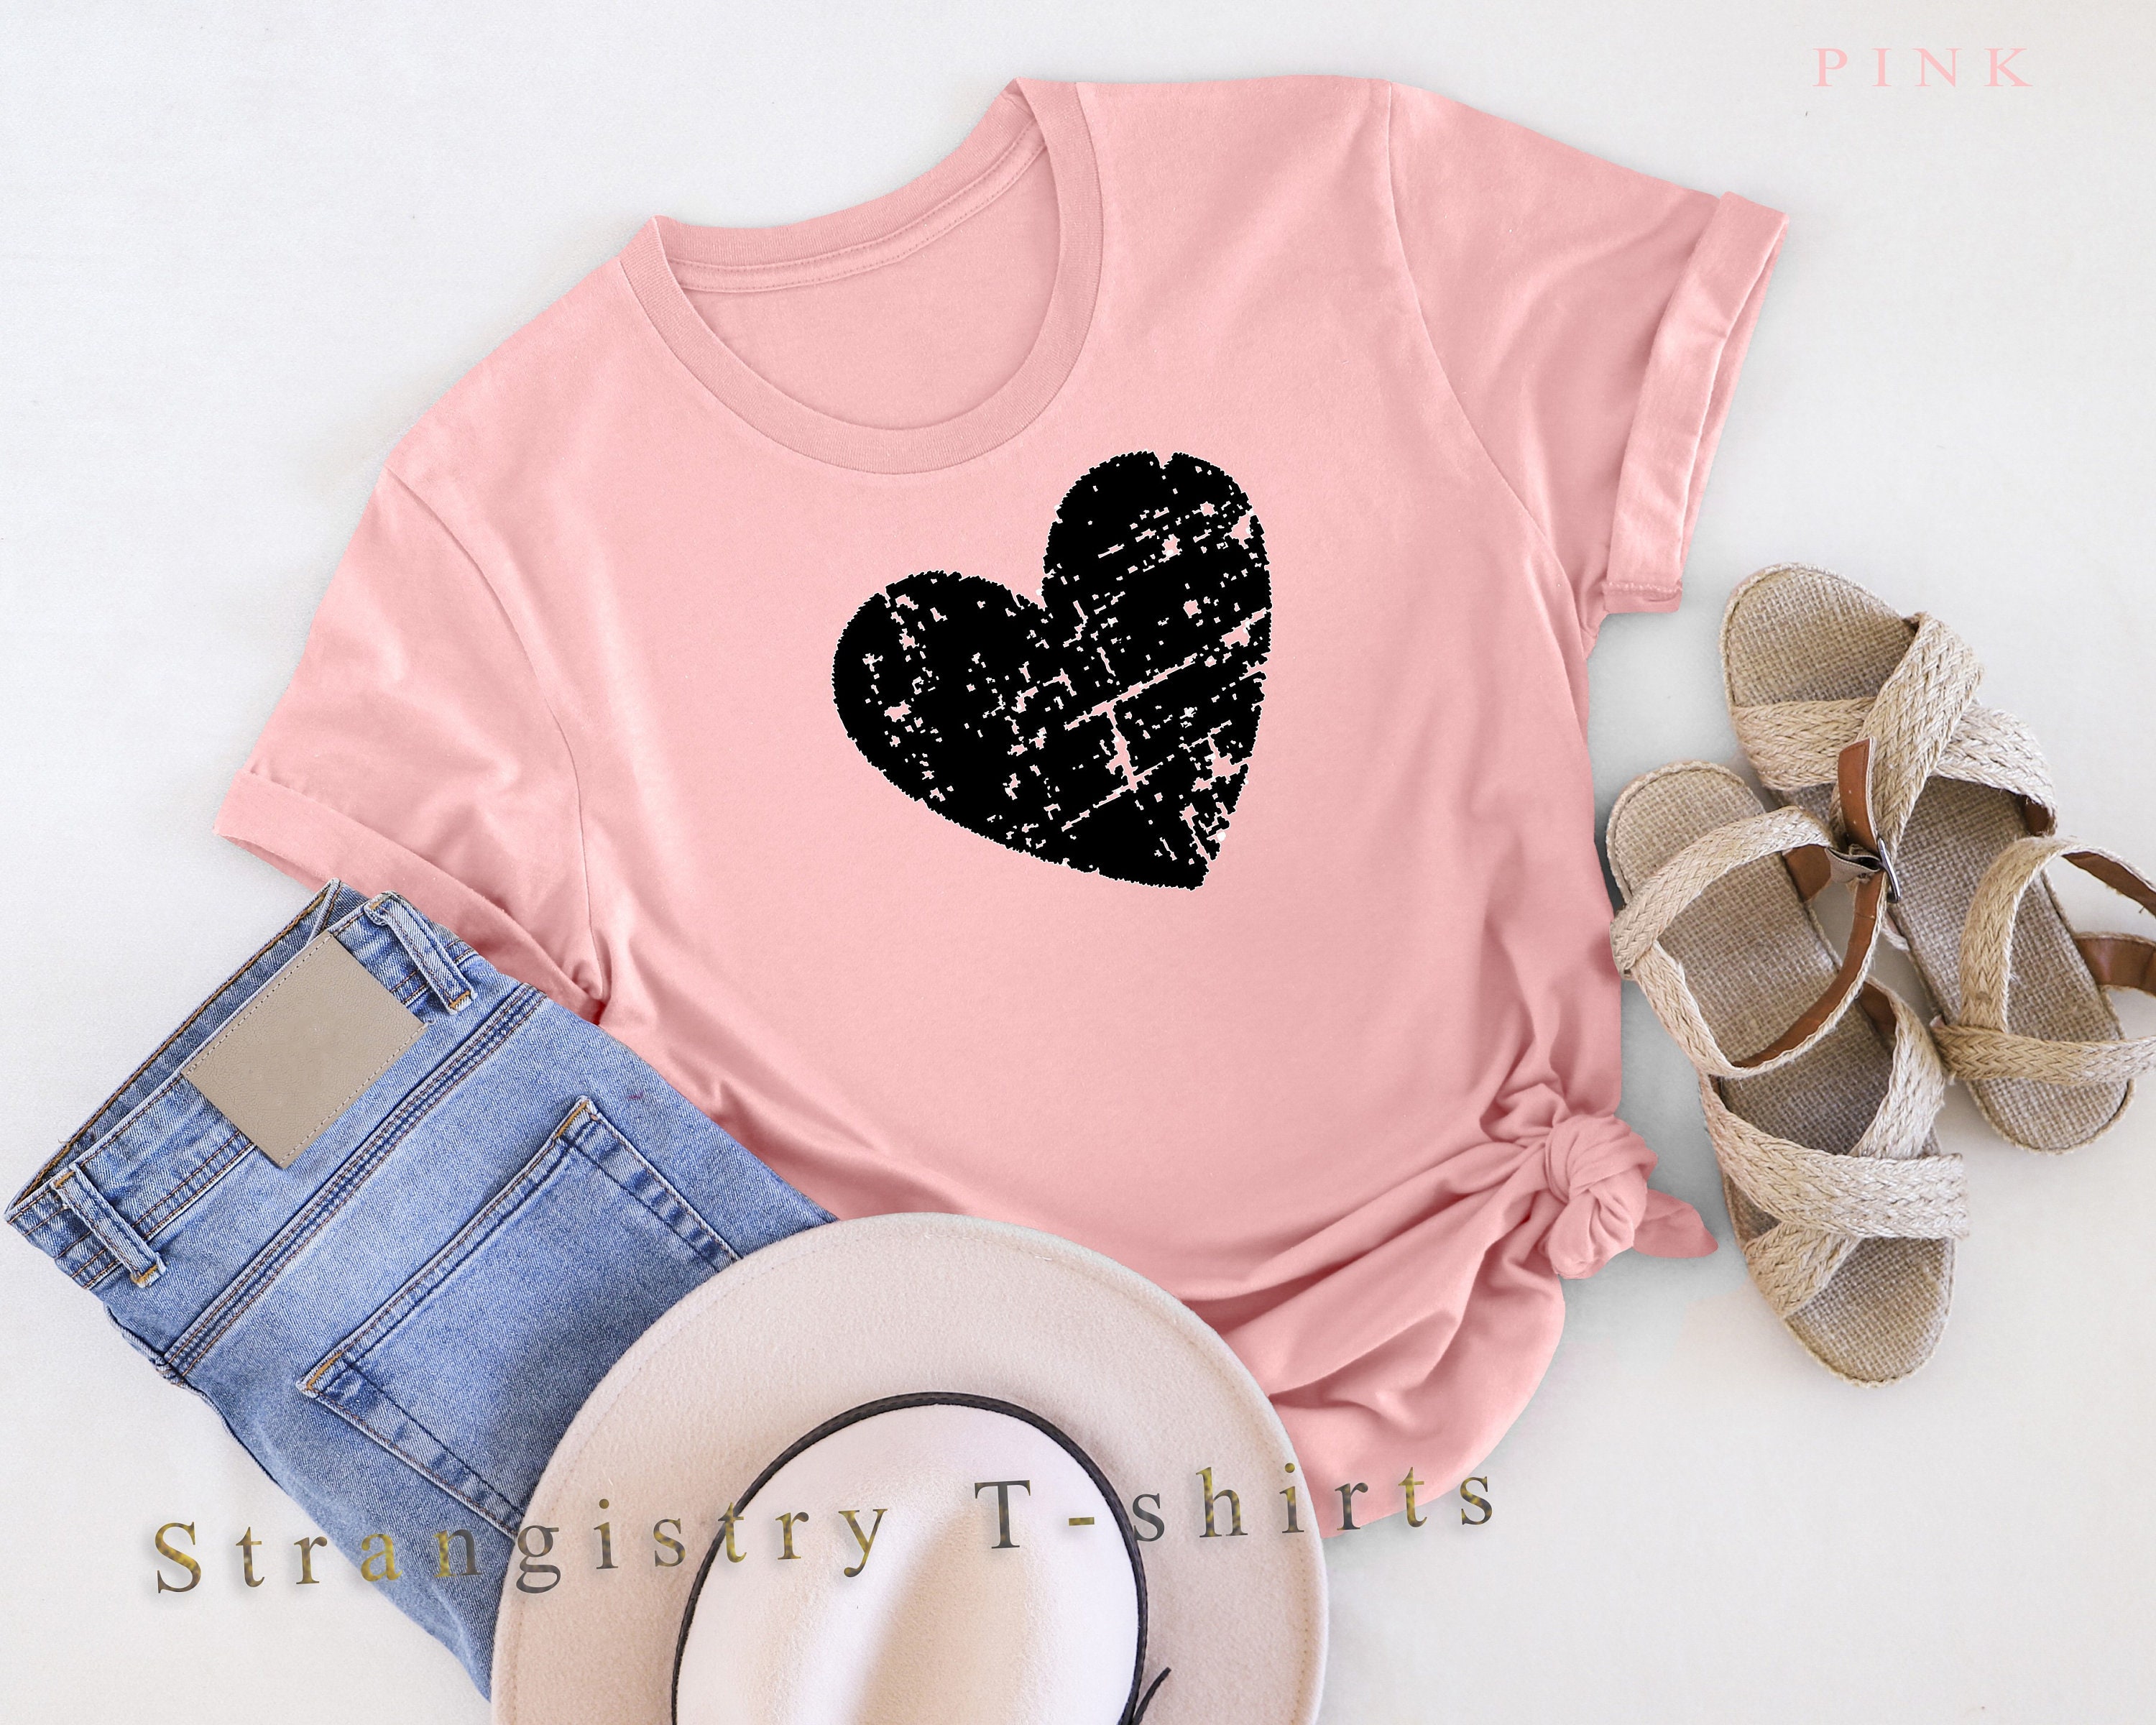 Vintage Heart Love T-shirt. Custom Design Love Shirt with the